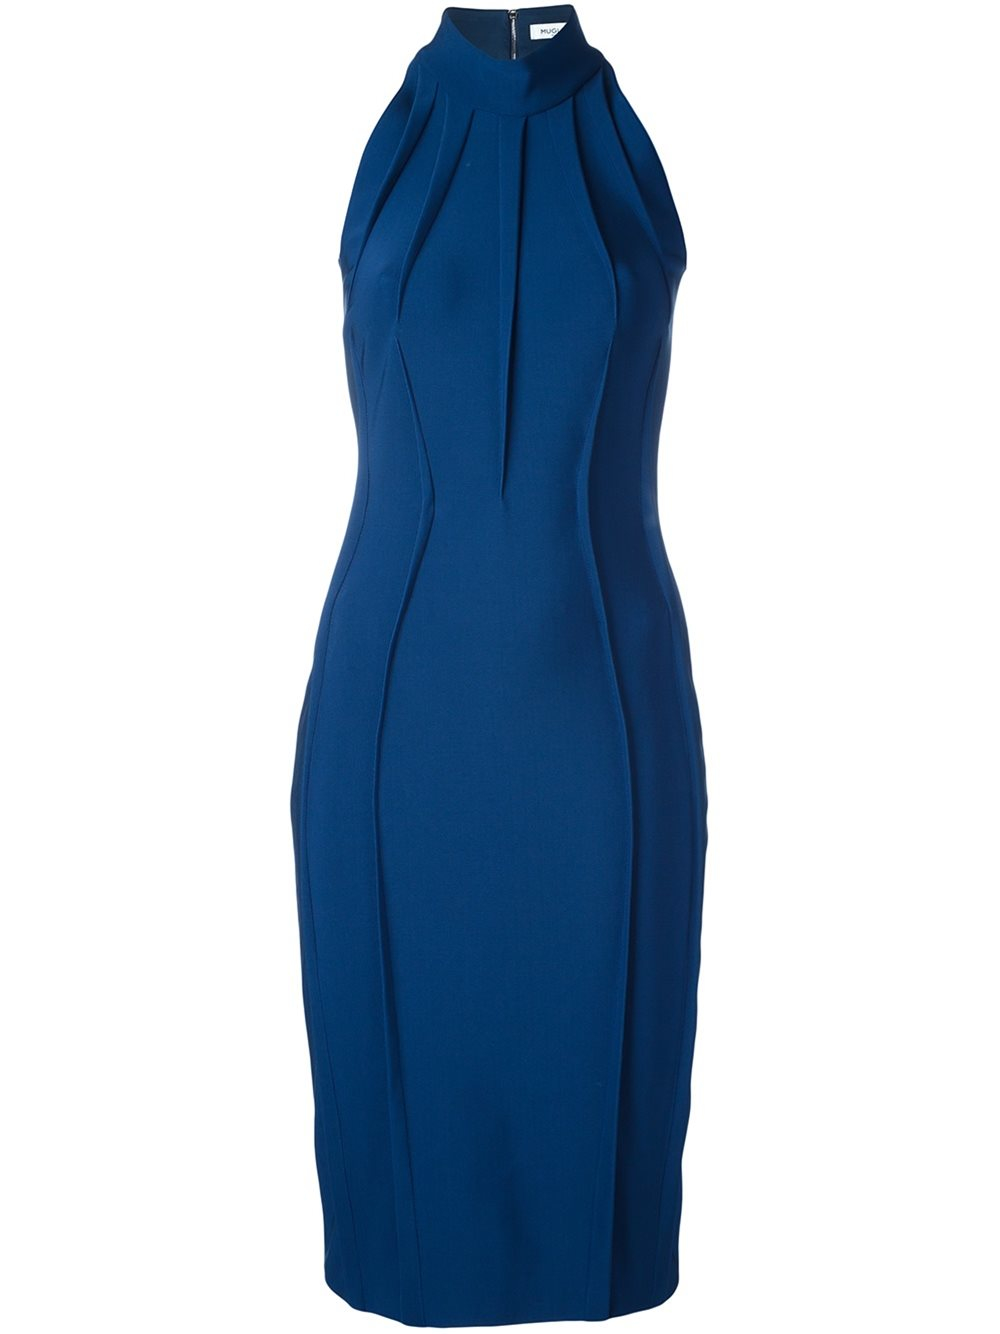 Mugler Fitted Dress in Blue | Lyst